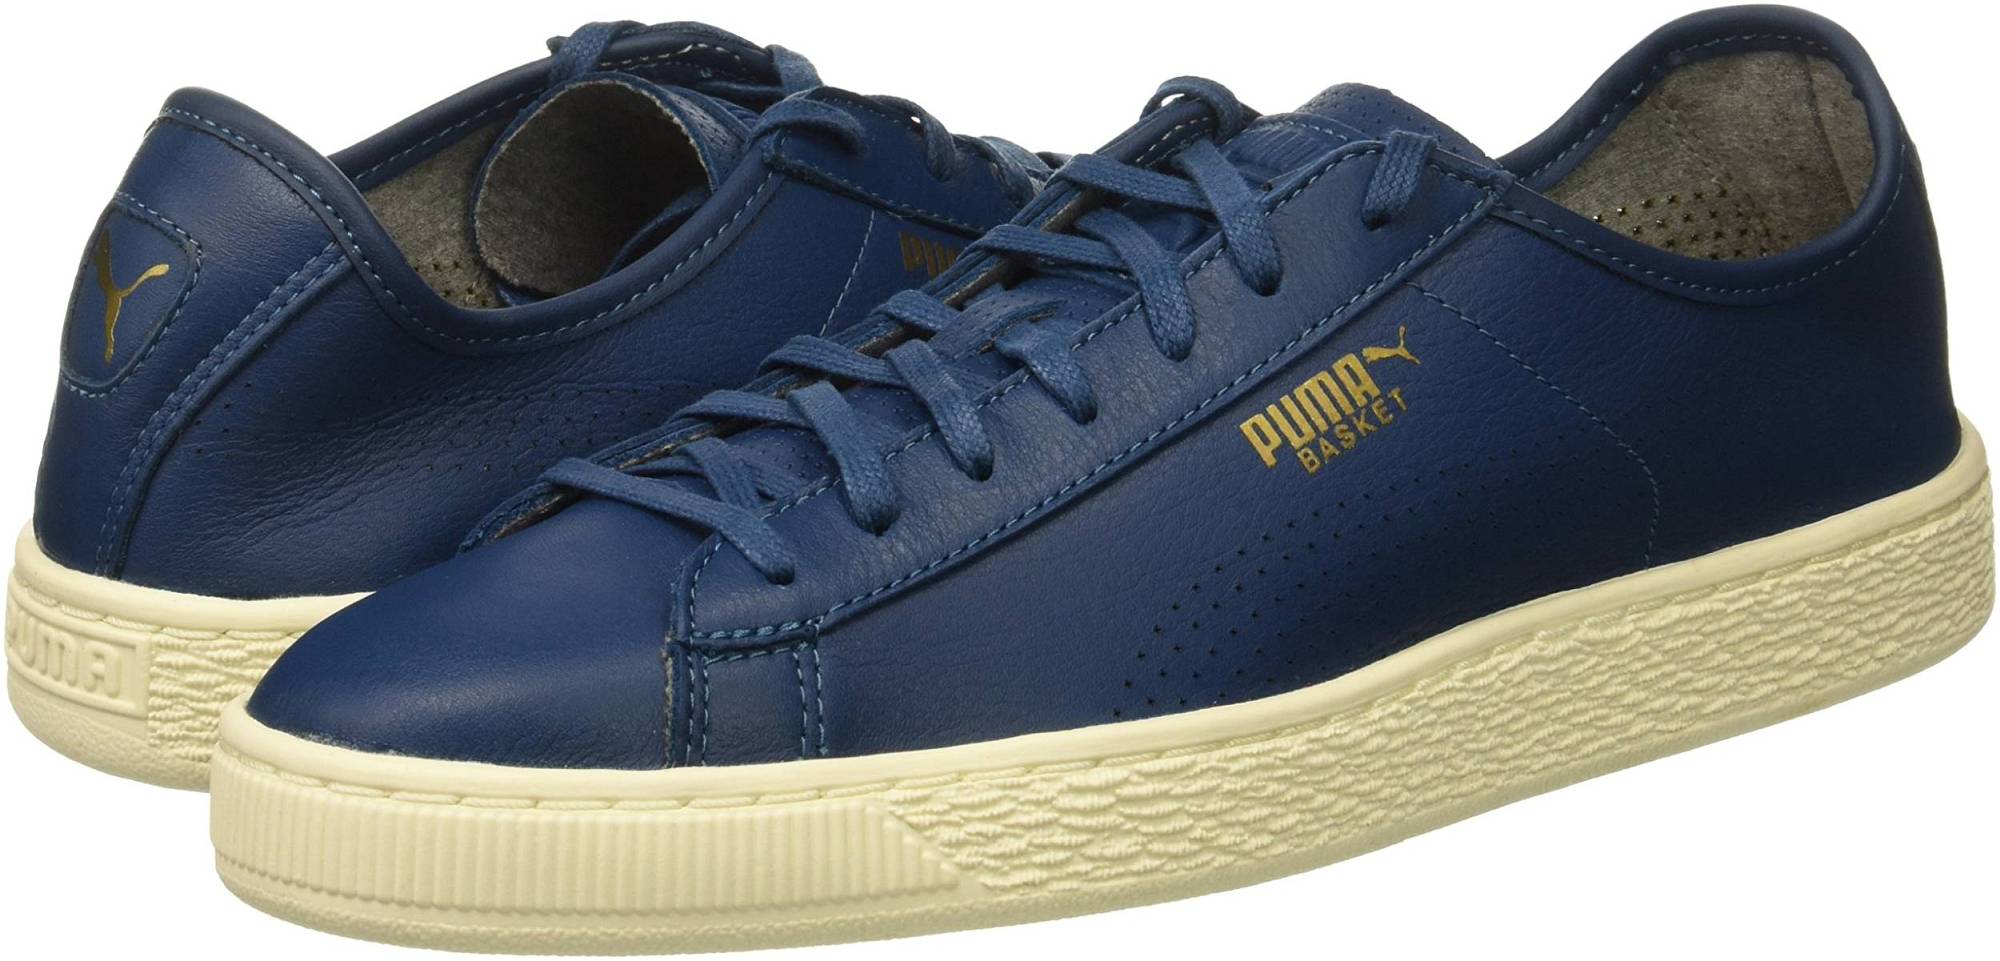 Puma Basket Classic Soft â Shoes Reviews & Reasons To Buy